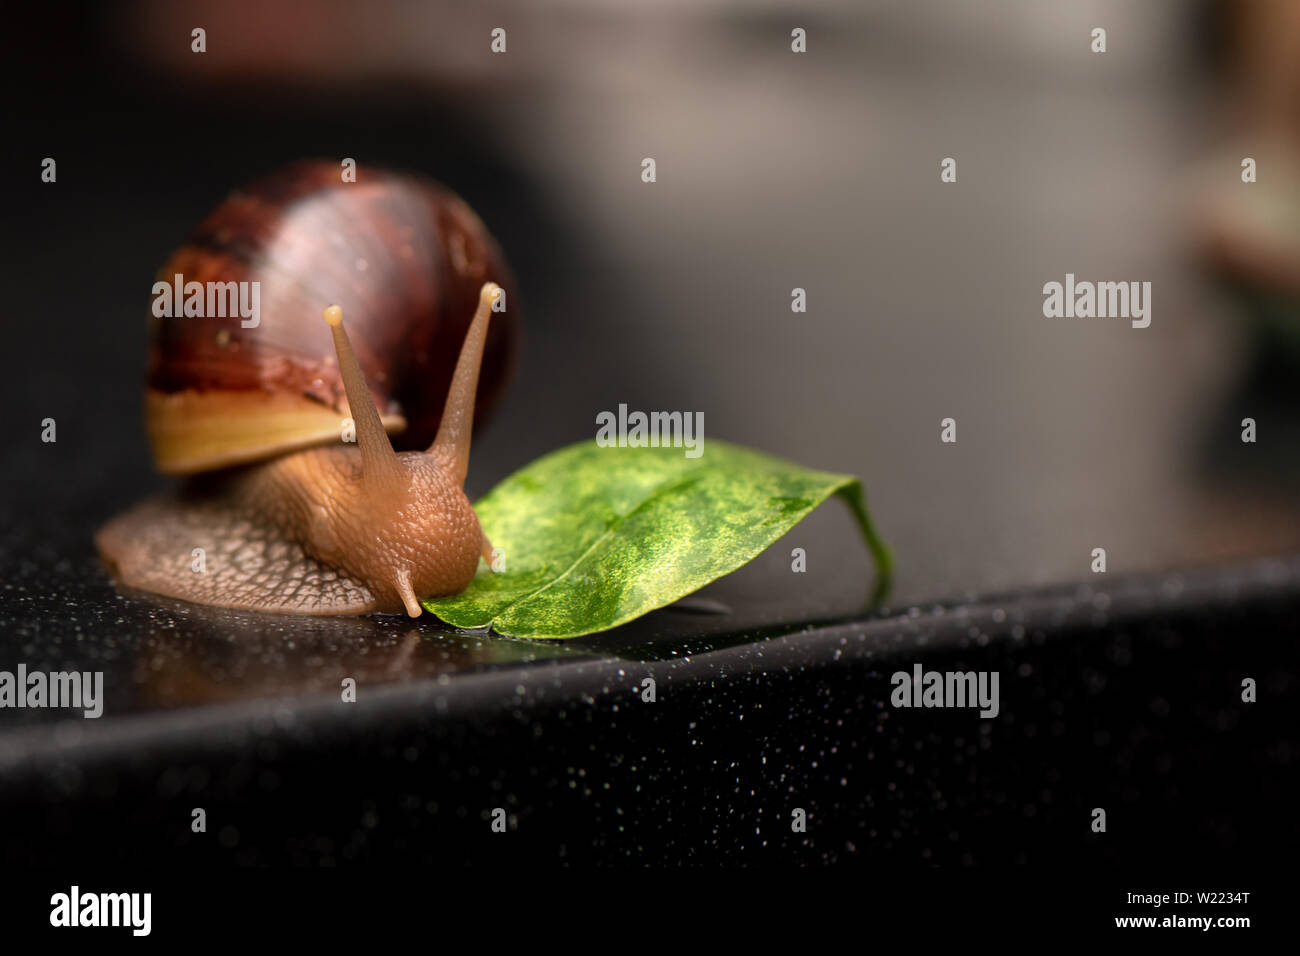 Big snail Achatina eating green leaf on a dark background Stock Photo